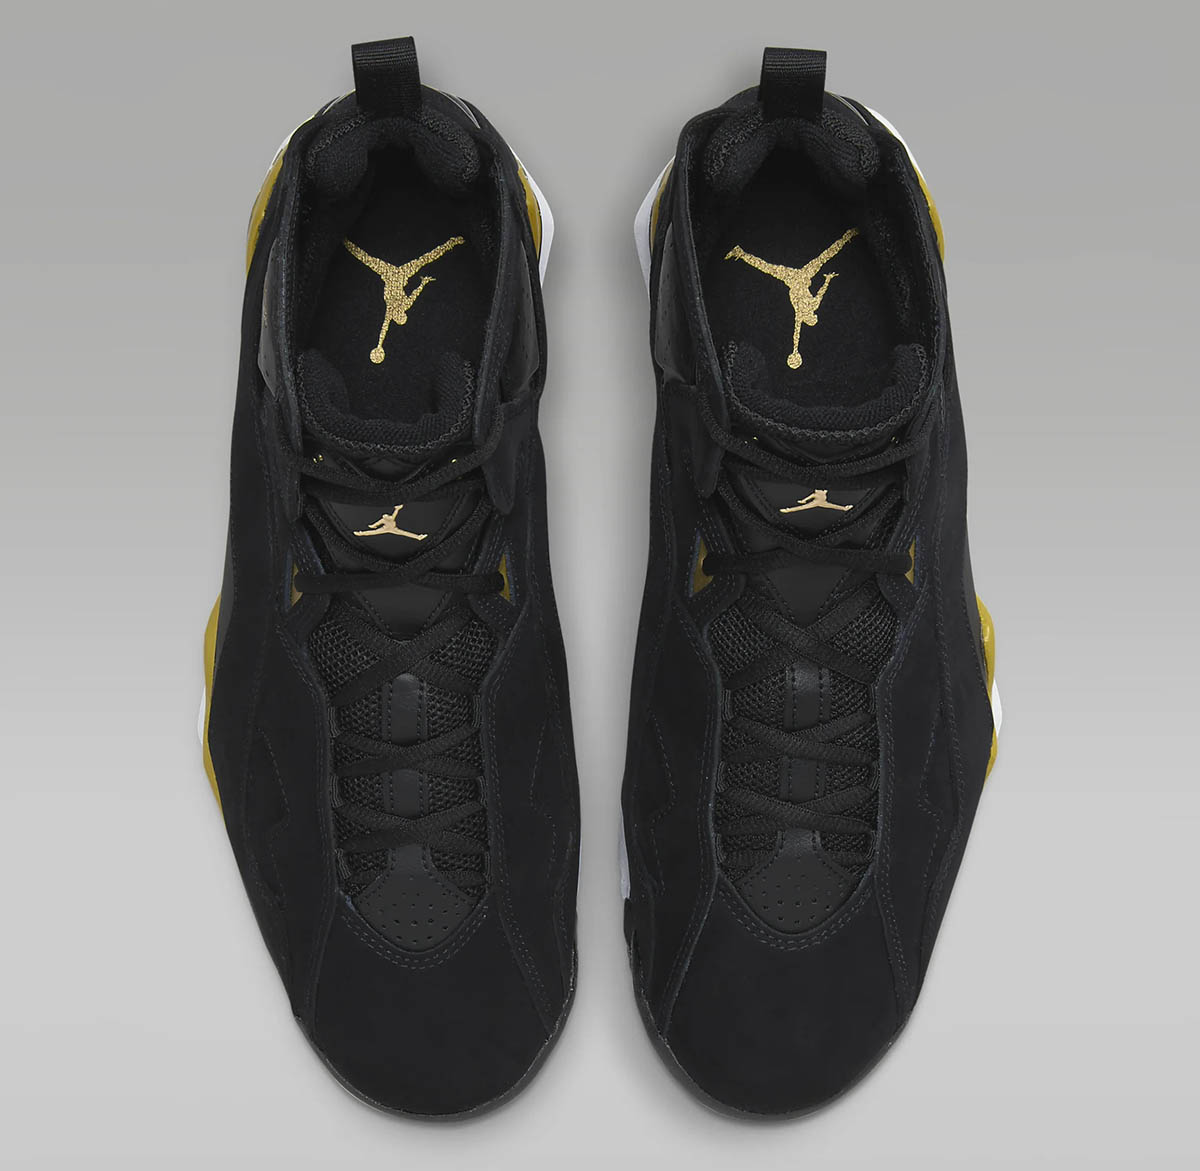 Jordan True Flight Black Metallic Gold Shoes 4